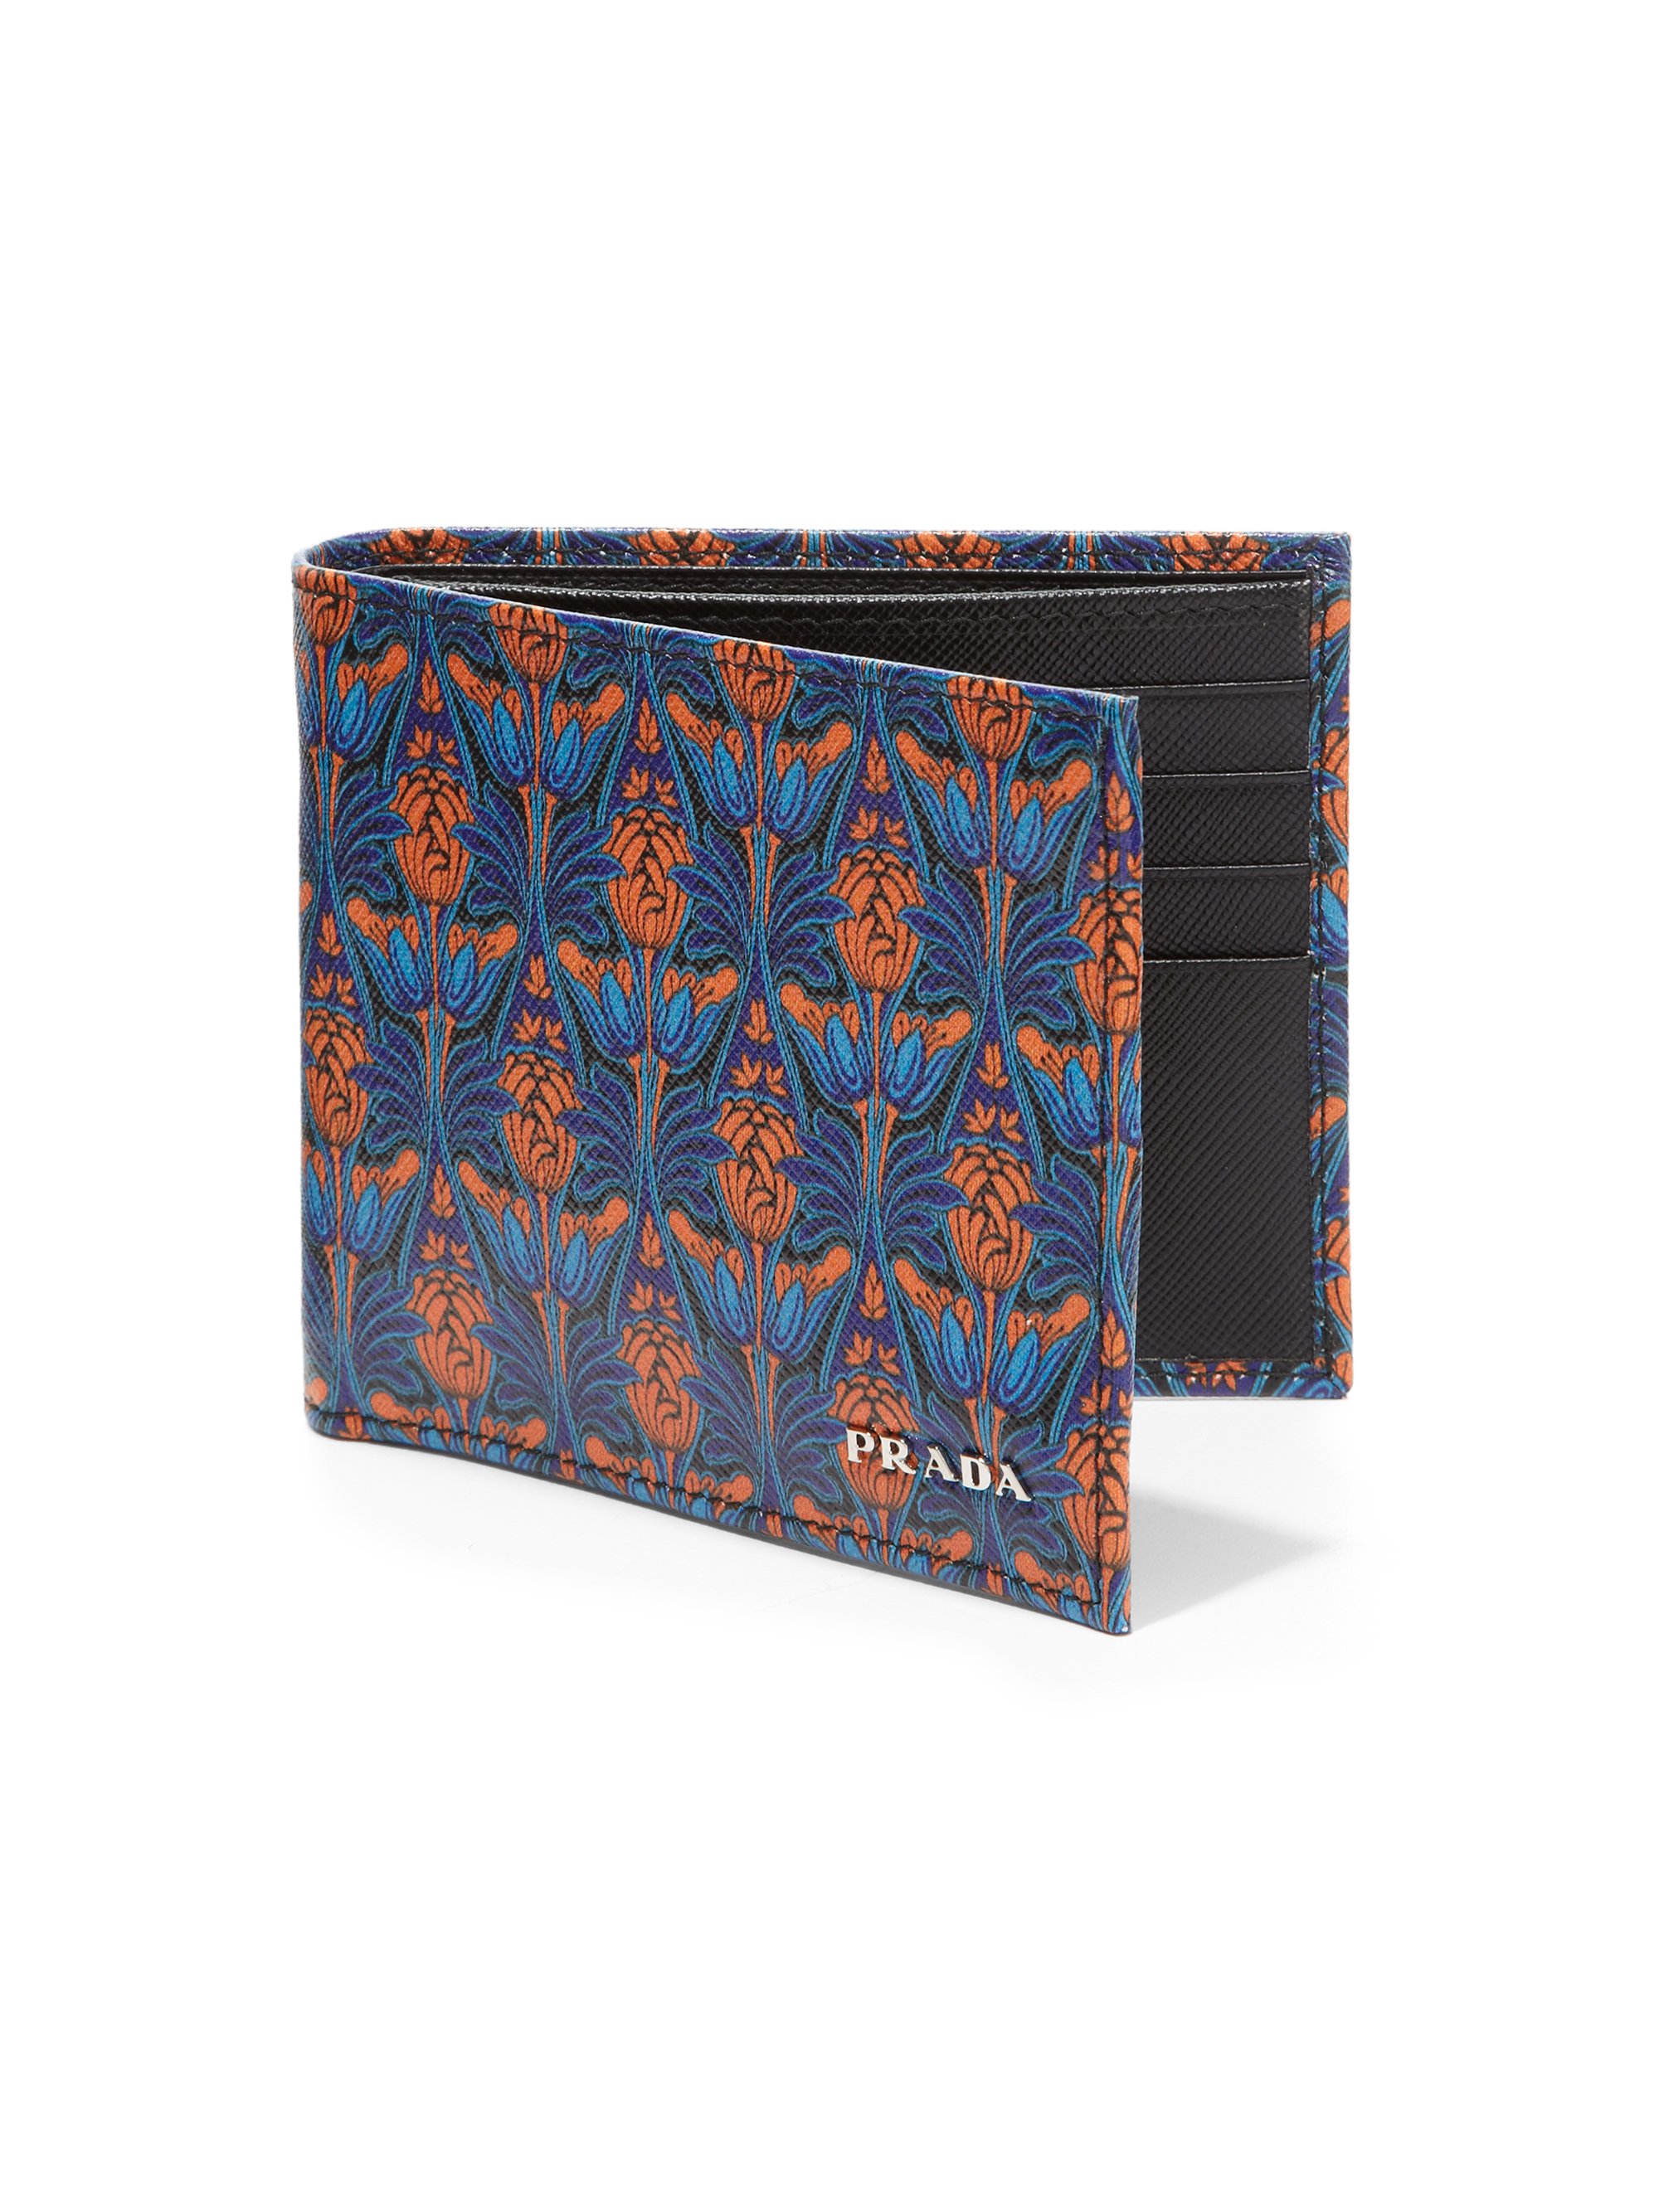 Prada Saffiano Print Bifold Wallet in Blue-Orange (Orange) for Men - Lyst